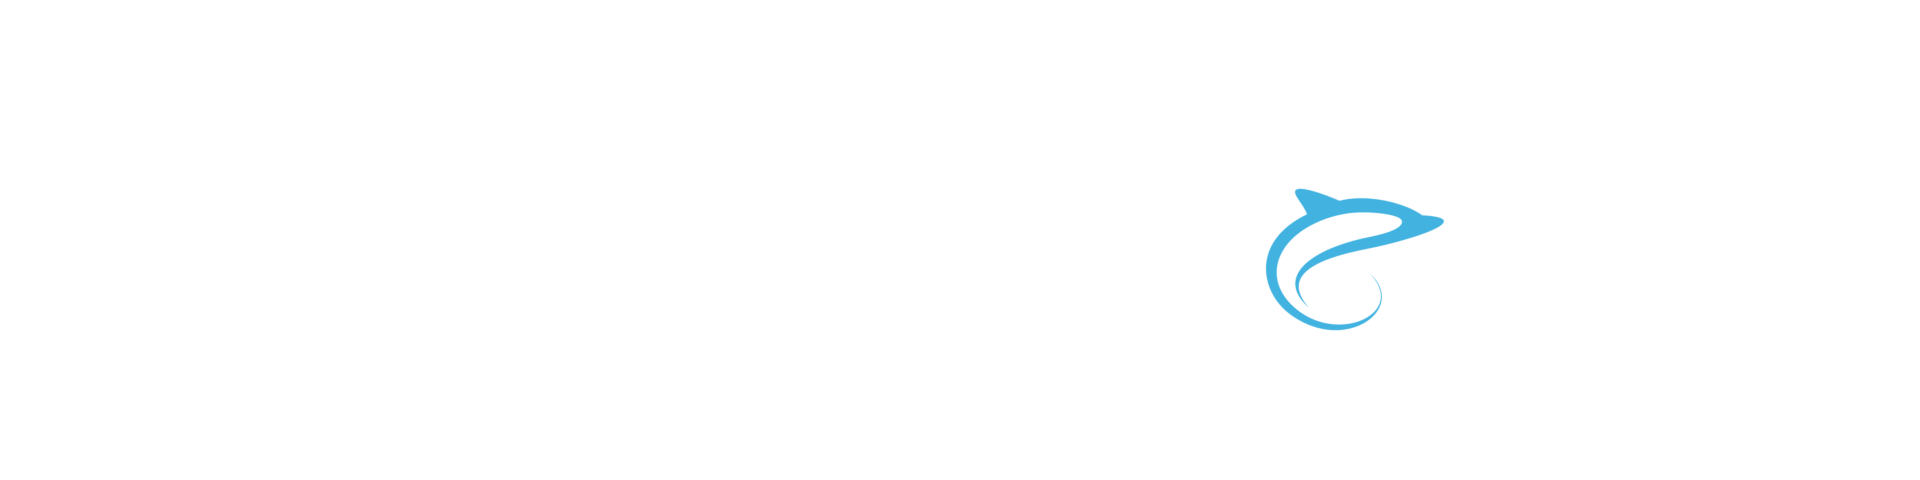 Echo Properties logo